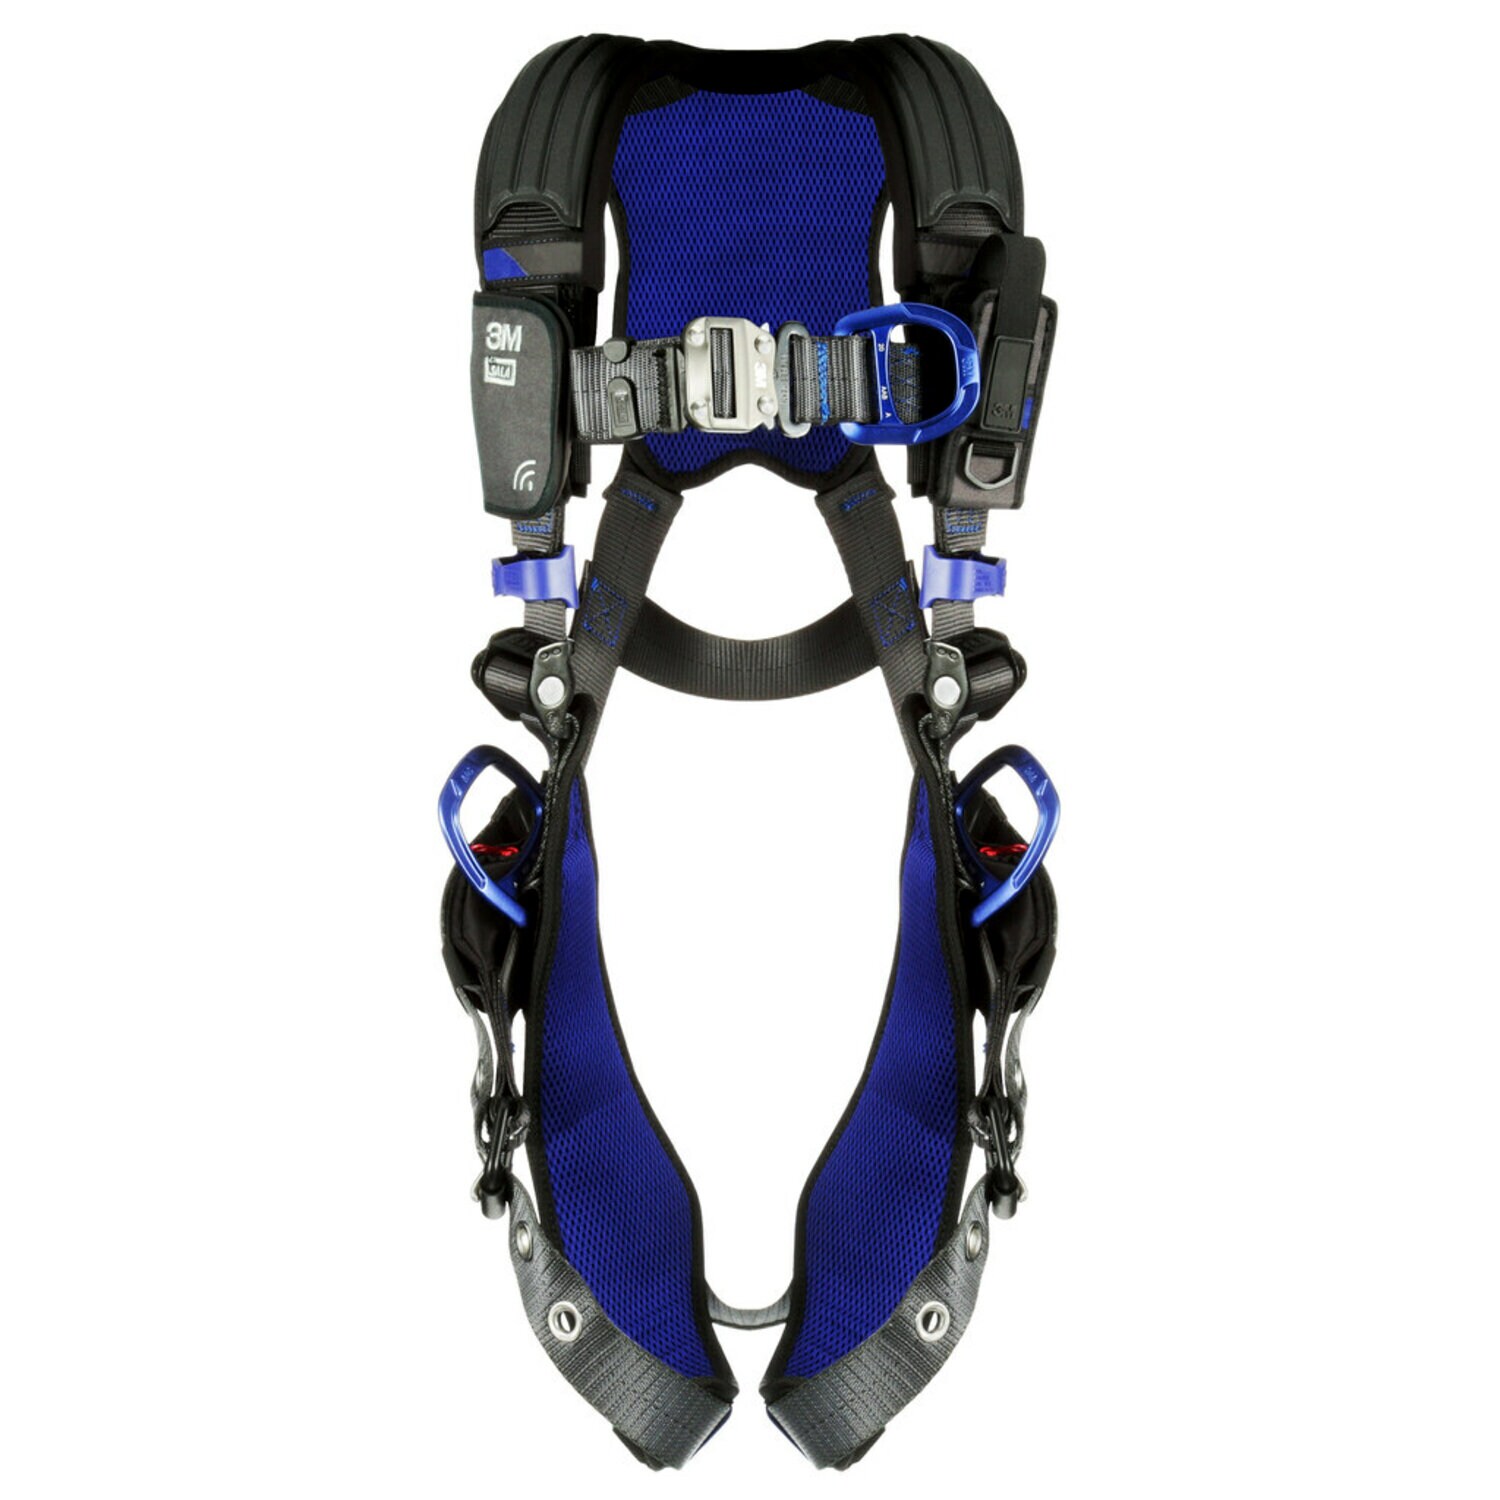 7012816358 - 3M DBI-SALA ExoFit NEX X300 Comfort Vest Climbing/Positioning Safety Harness 1113444, X-Small